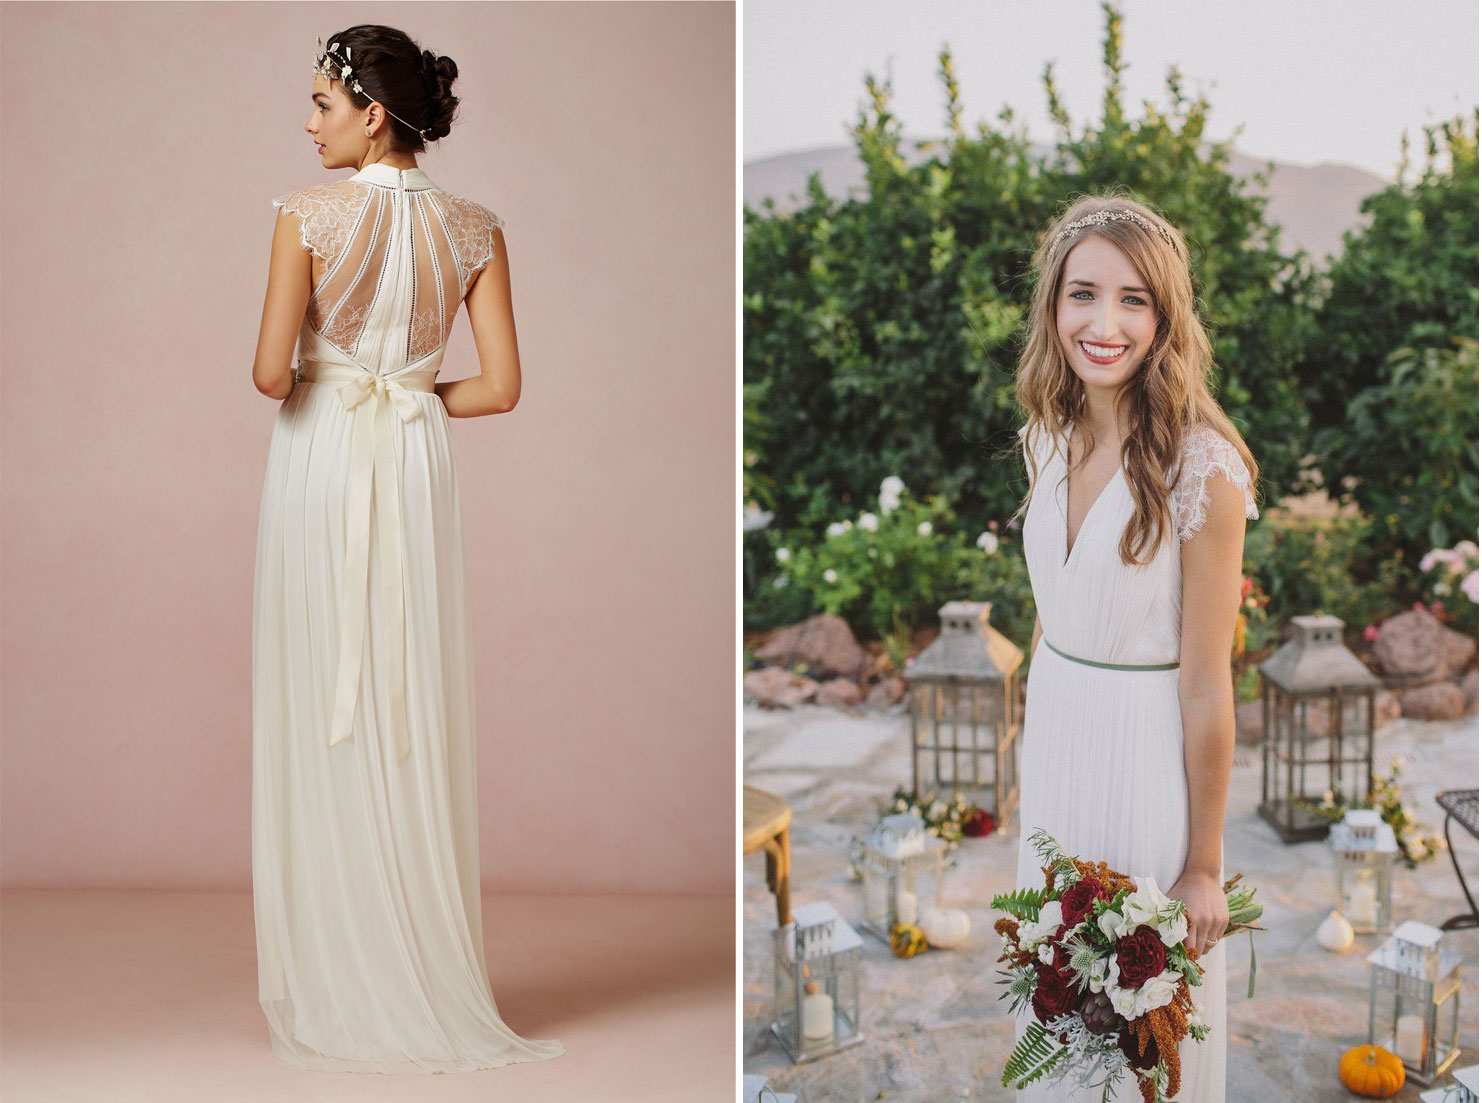 BHLDN Marguerite Peplum Corset Lace Wedding Gown | Wedding gowns lace,  Wedding dresses lace, Wedding gowns